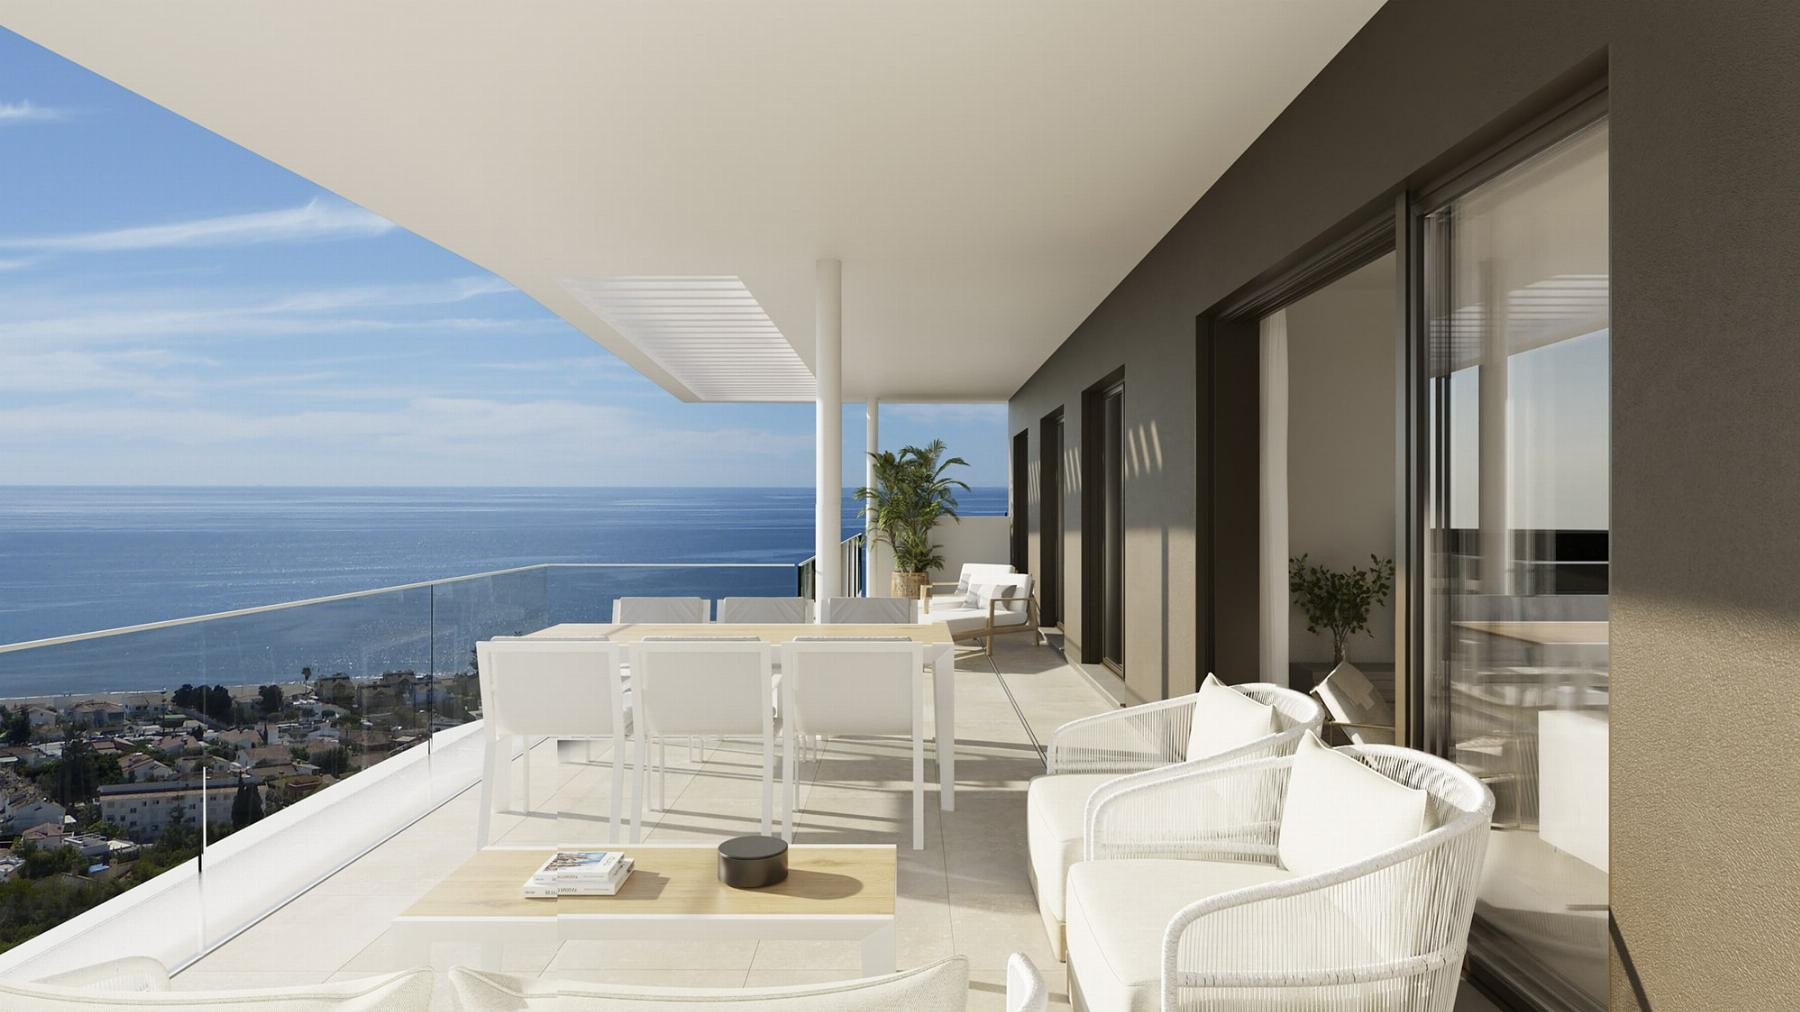 Idilia Mare: Apartments and penthouses with ocean views in Rincón de la Victoria. | Image 4